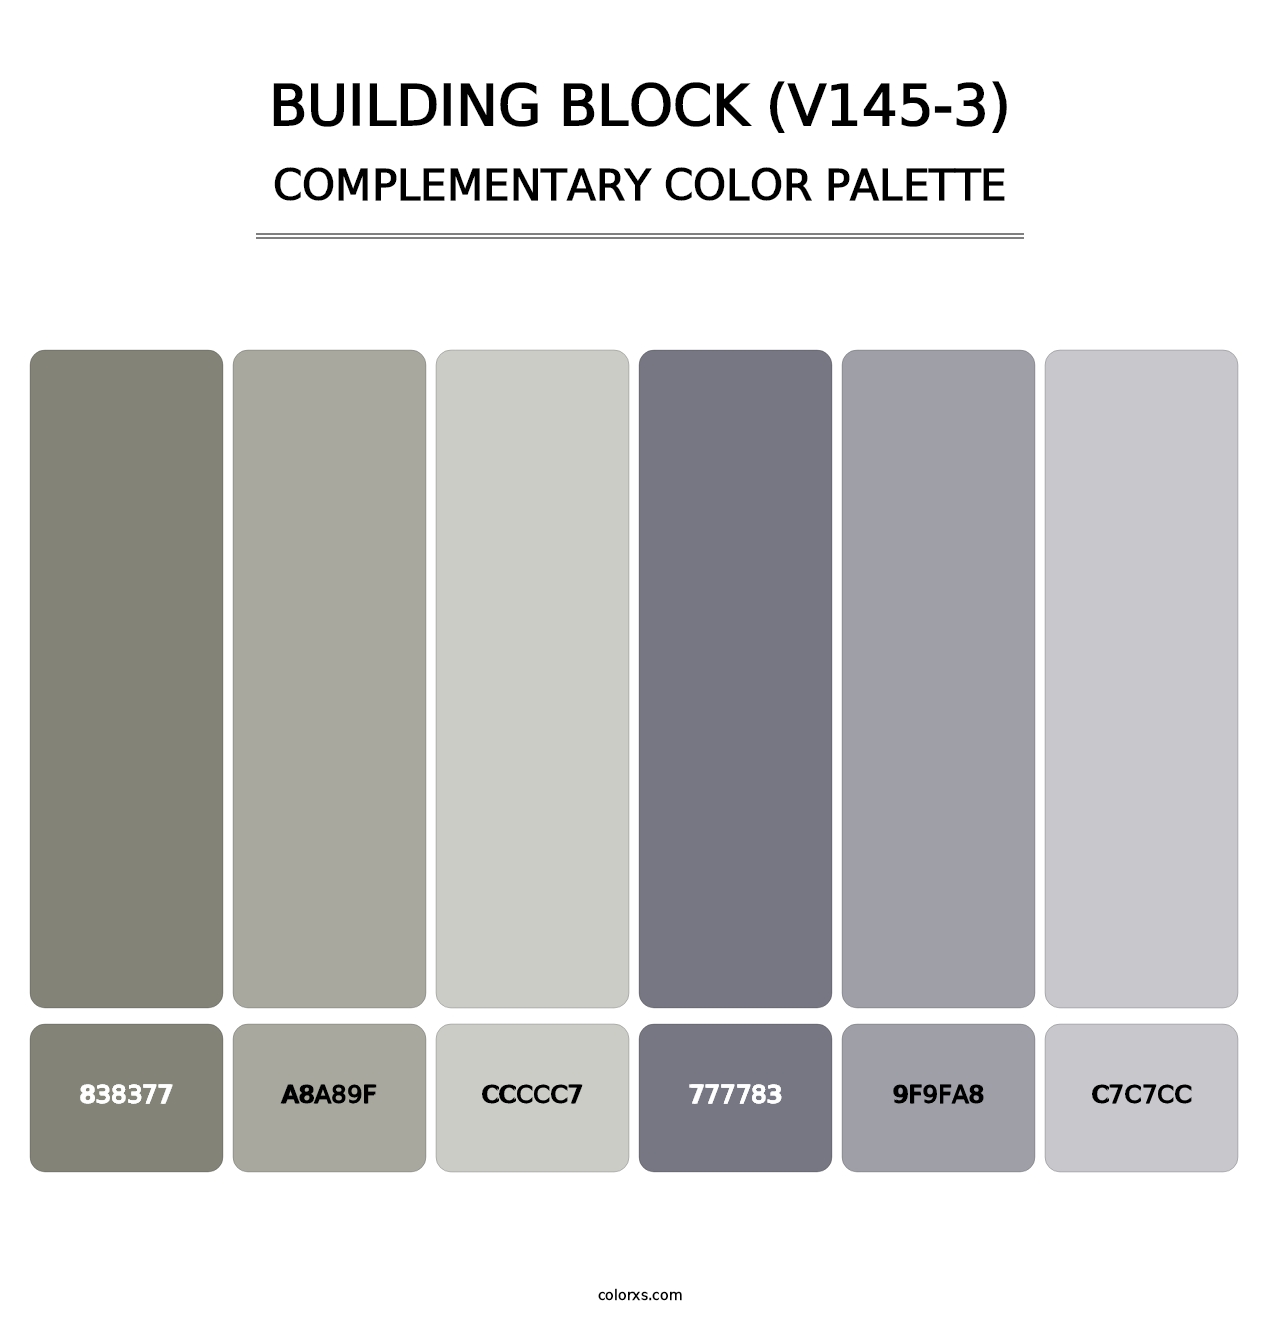 Building Block (V145-3) - Complementary Color Palette